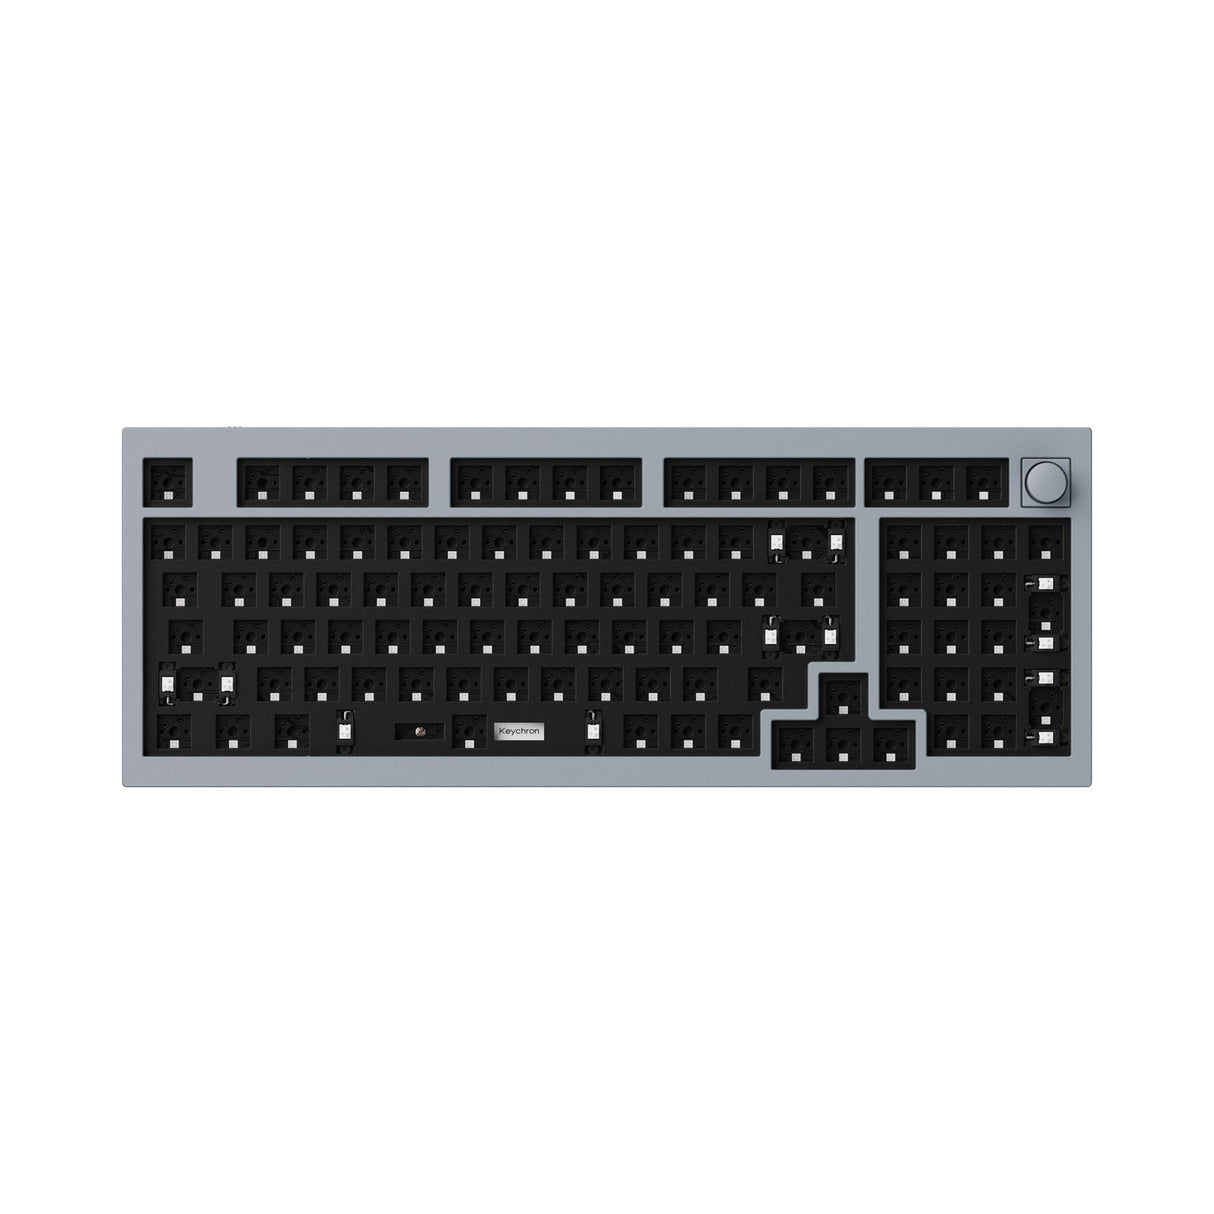 Keychron Q5 QMK aangepast mechanisch toetsenbord (VS ANSI-toetsenbord)